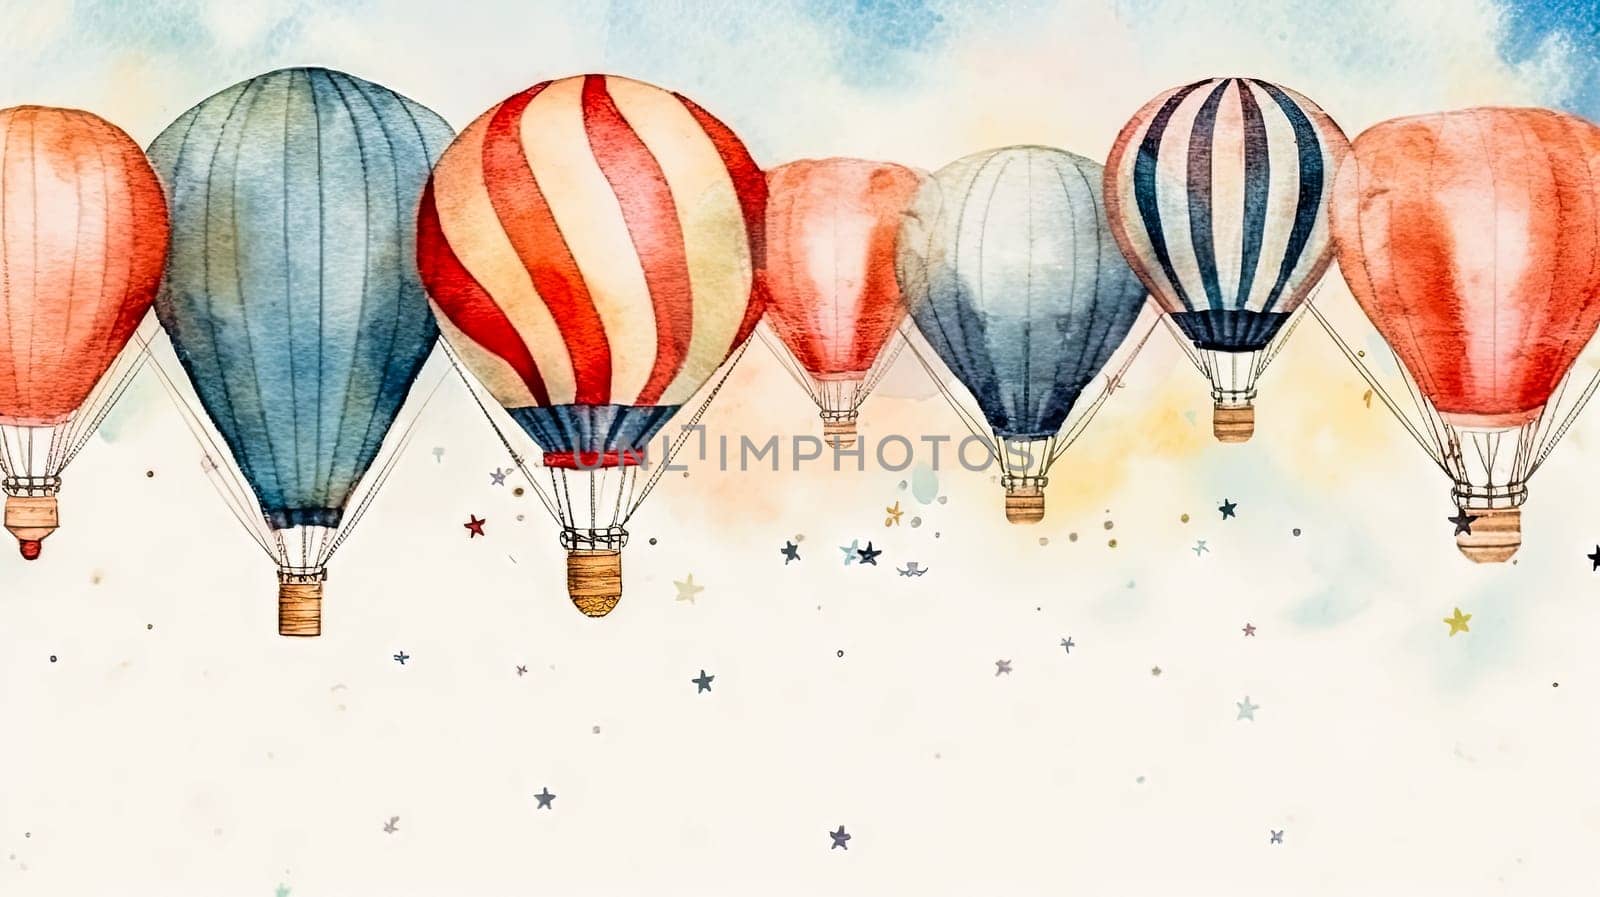 A majestic hot air balloon soars by Alla_Morozova93